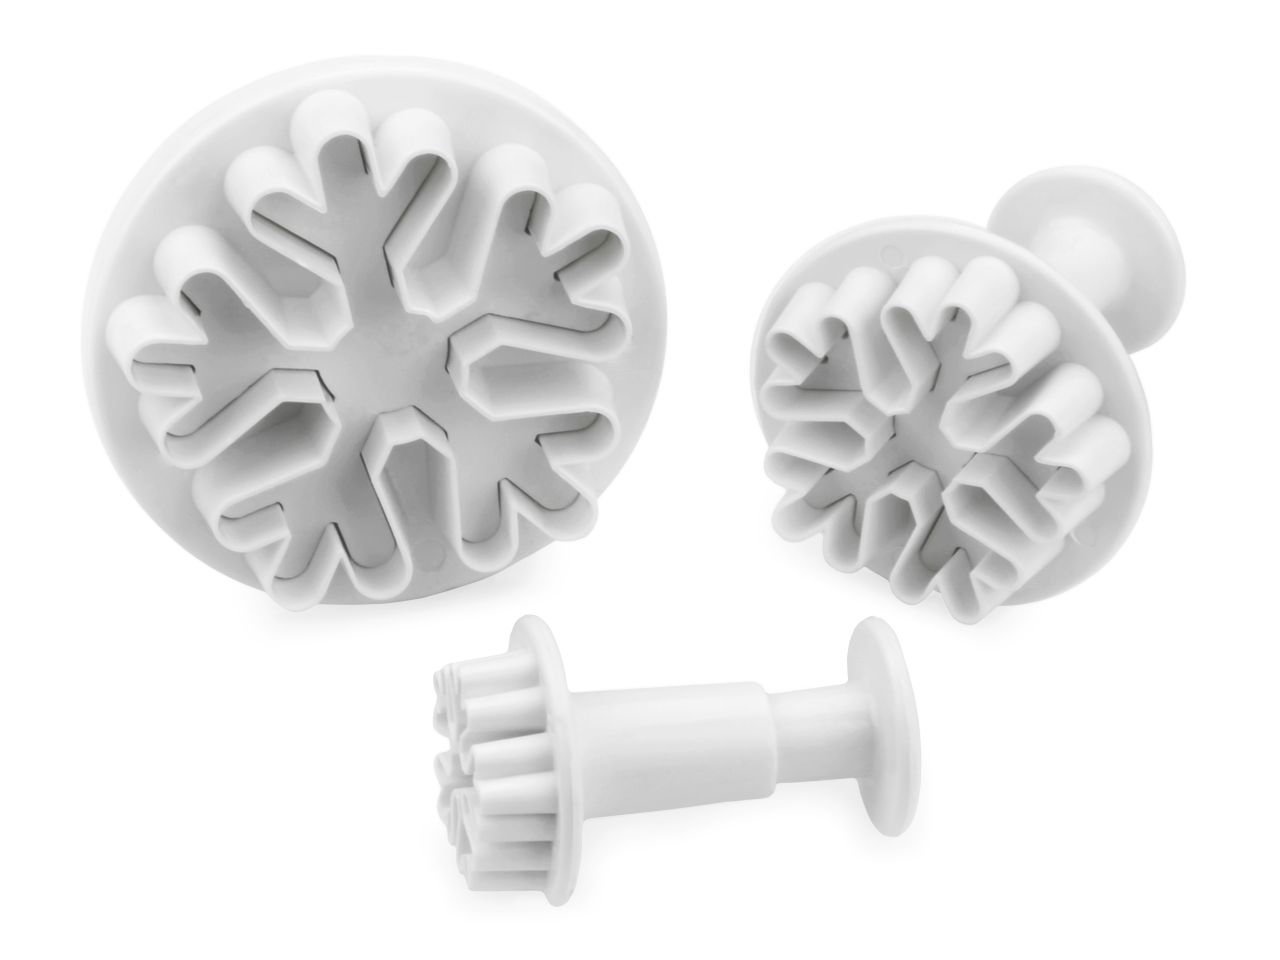 Ausstecher-Set mit Auswerfer: Eiskristall, Kunststoff, Weiß, 3 Stück à 25, 40, 55 mm